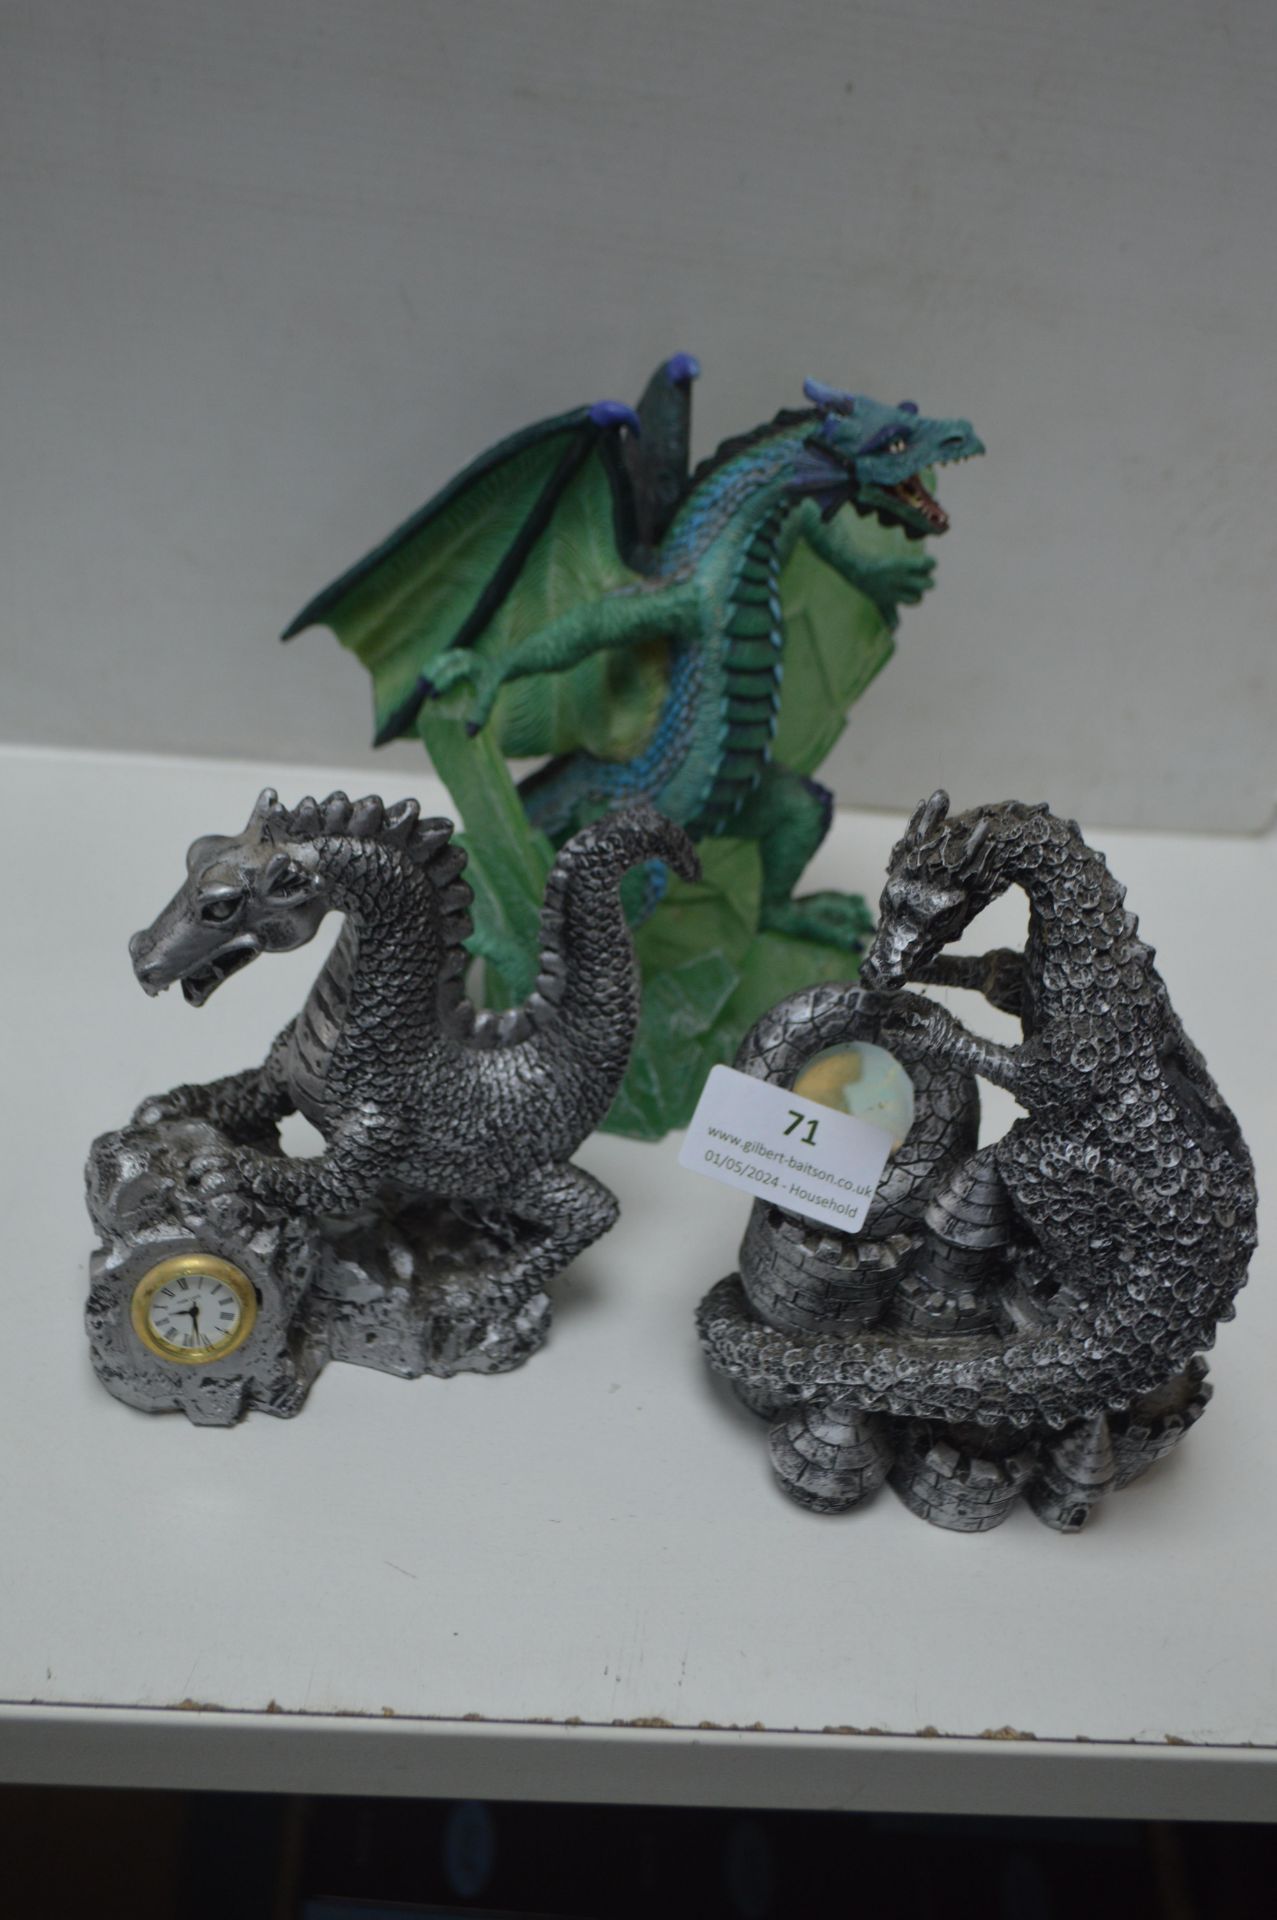 Three Dragon Figures